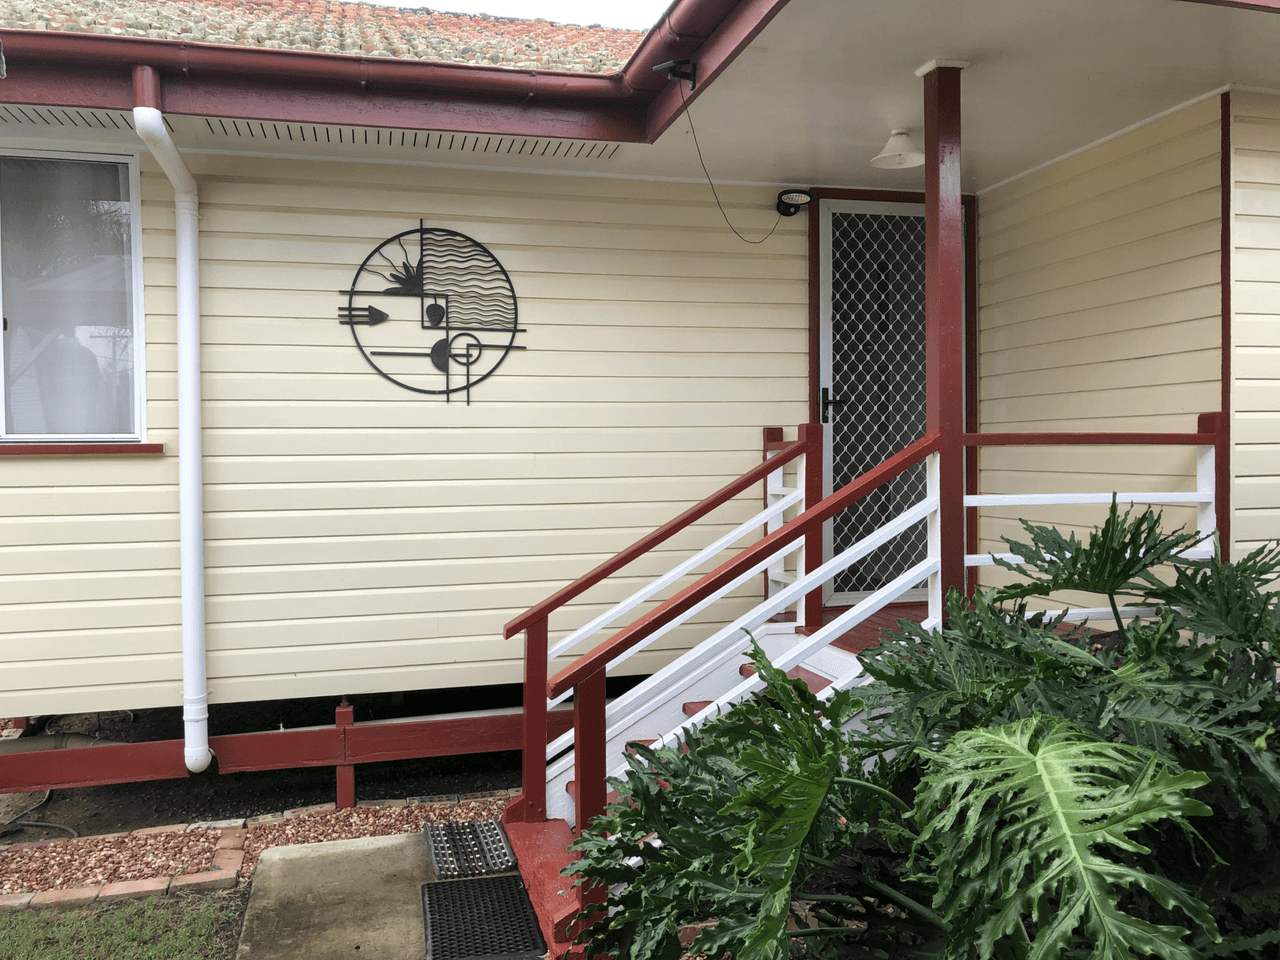 14 McGregor St, GOONDIWINDI, QLD 4390